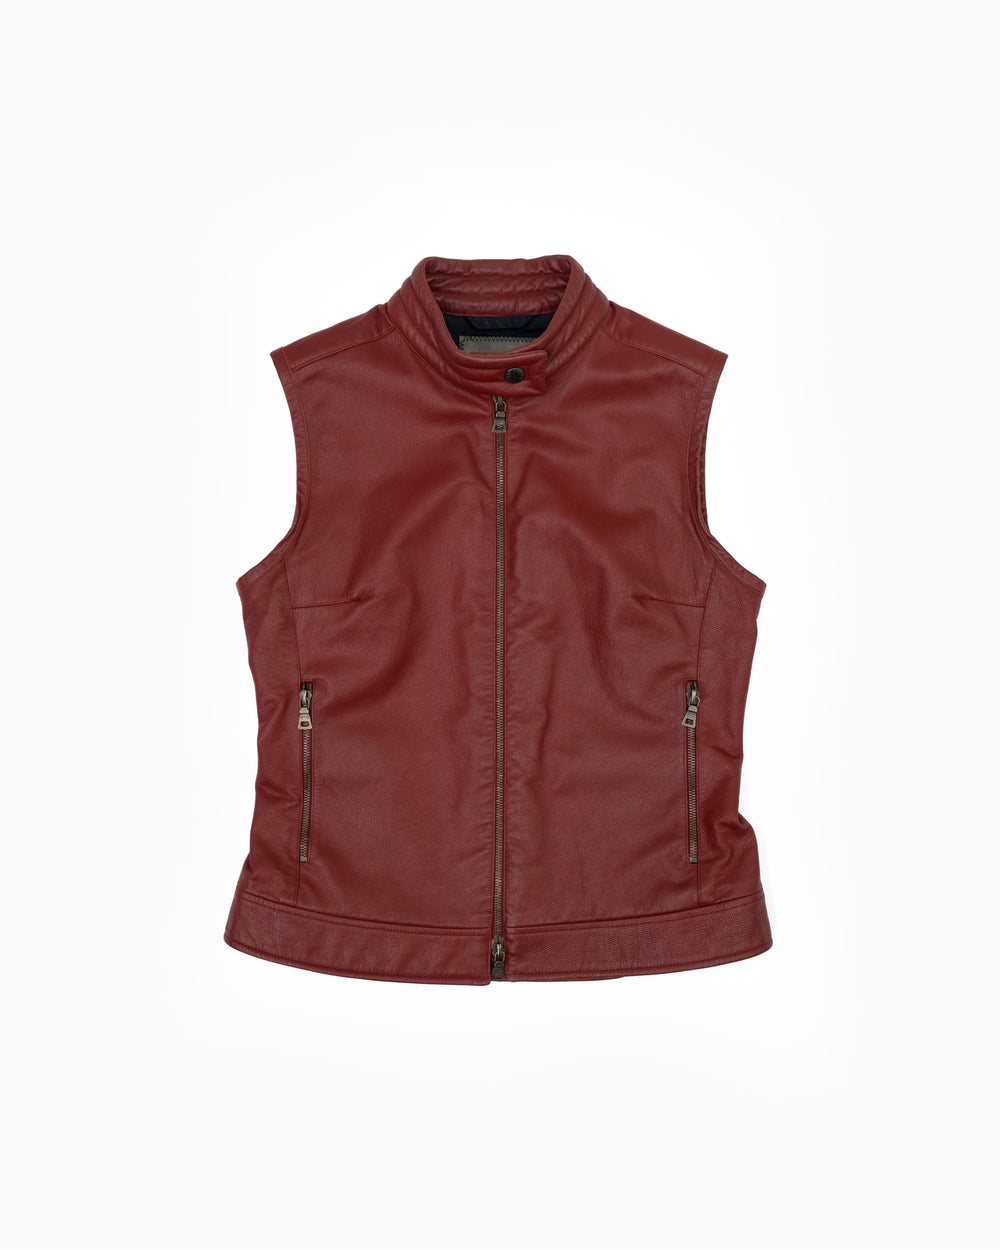 Prada SS00 Motorcycle Leather Vest